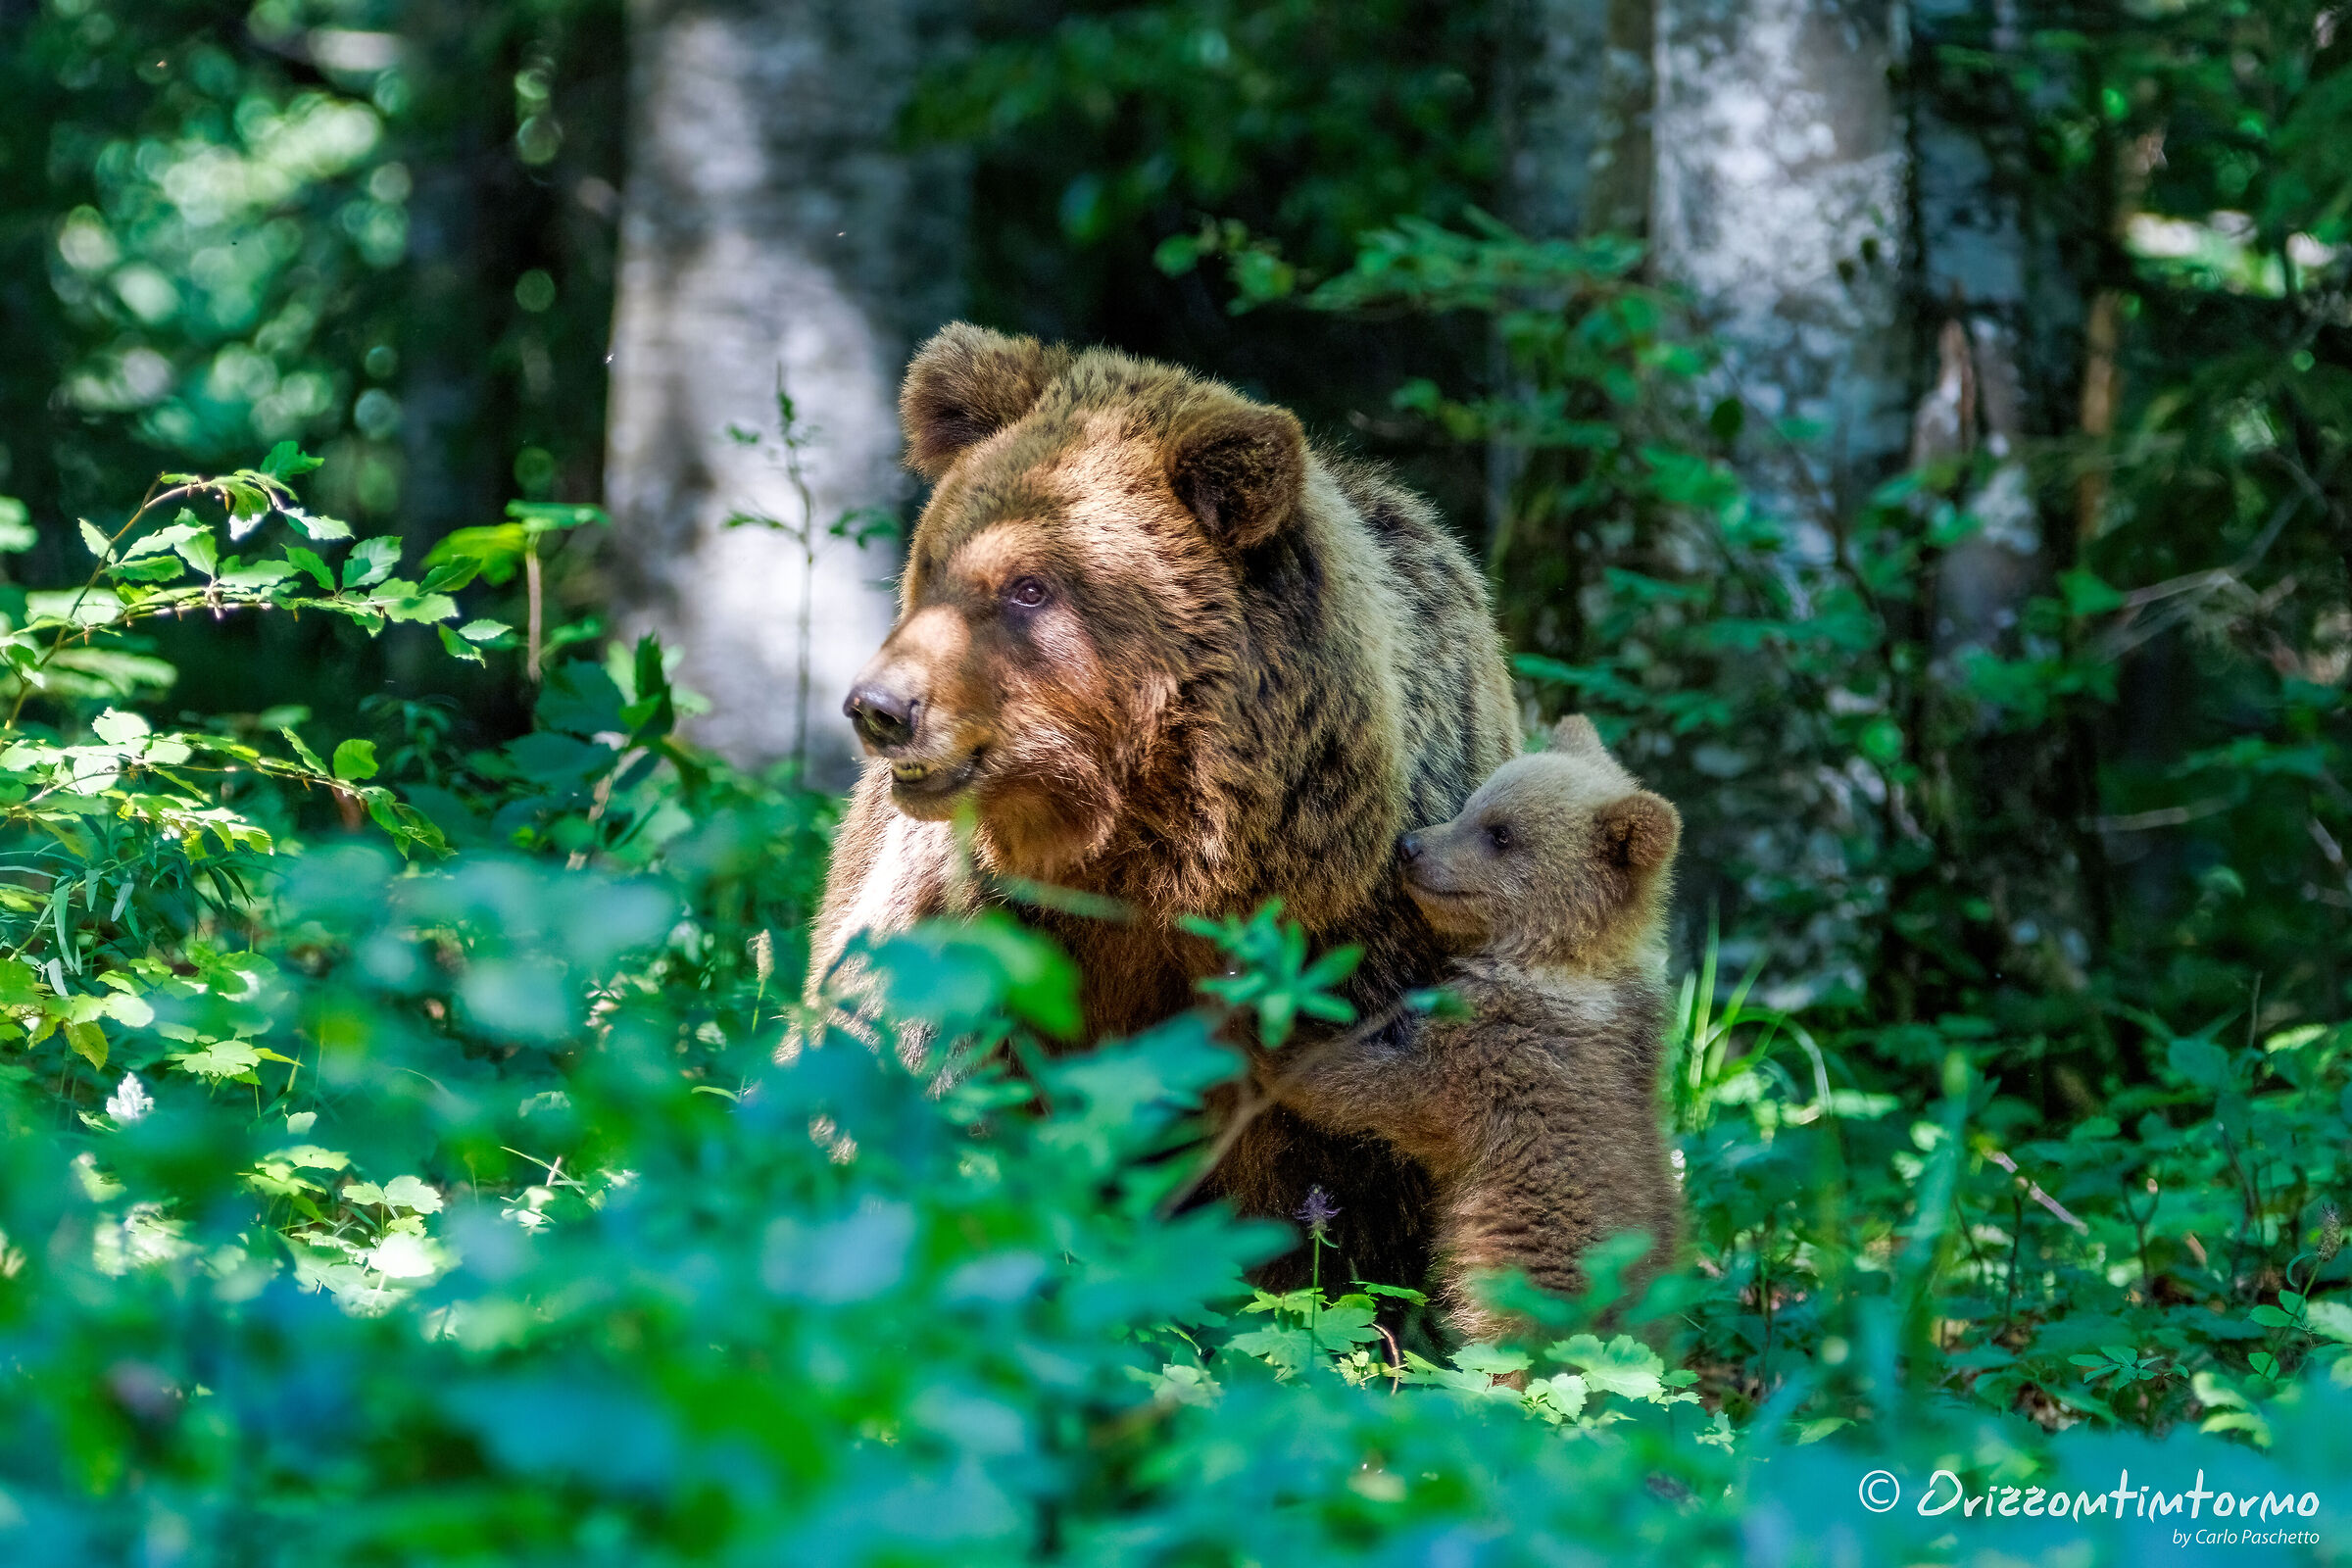 Bear watching in Slovenia...